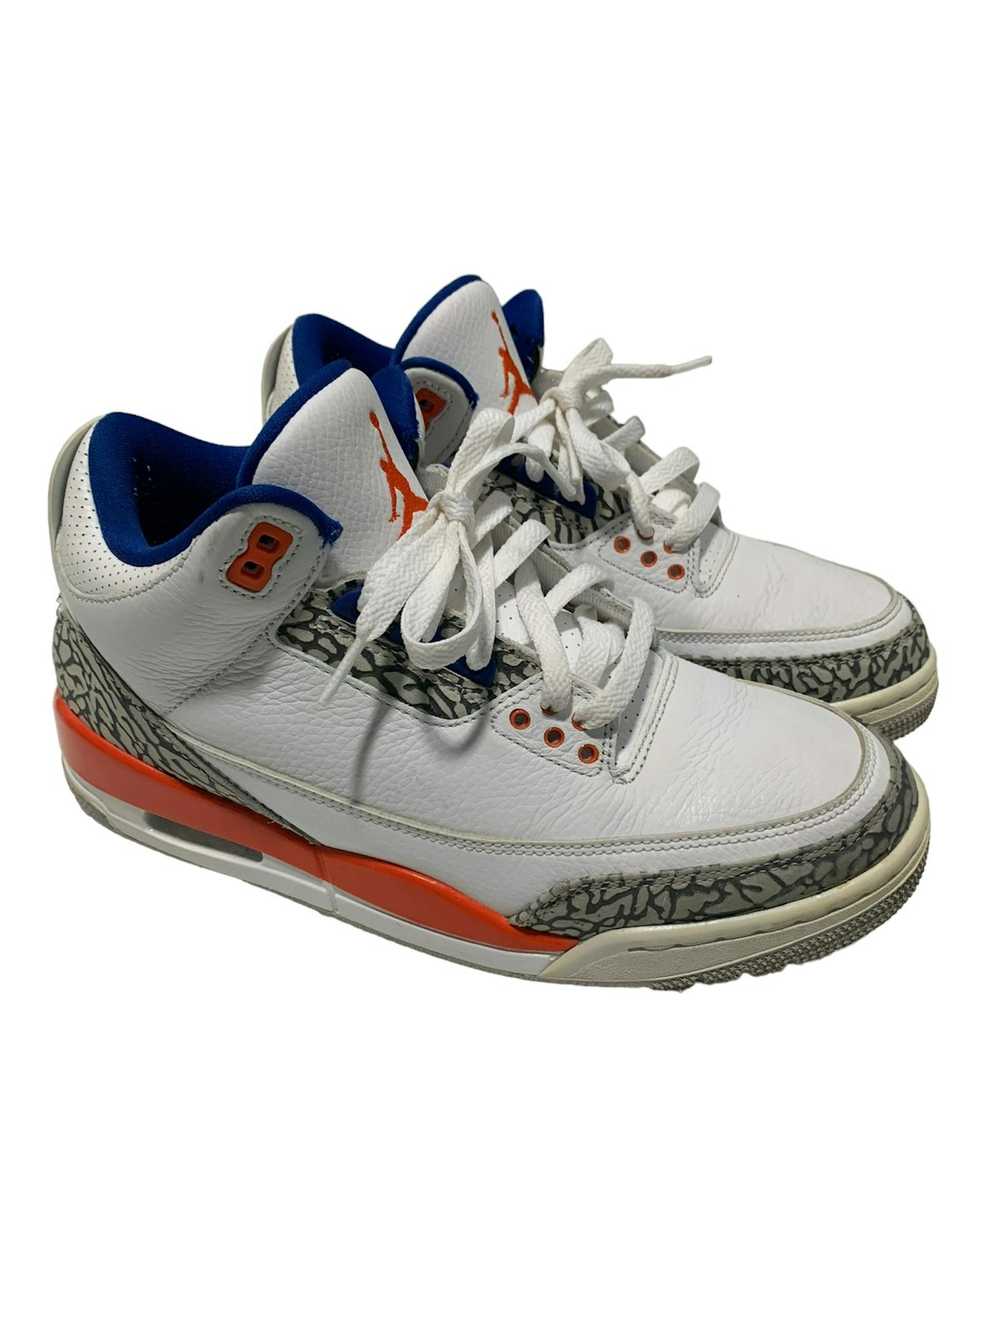 Jordan Brand Air Jordan 3 Retro 'Knicks' - image 6